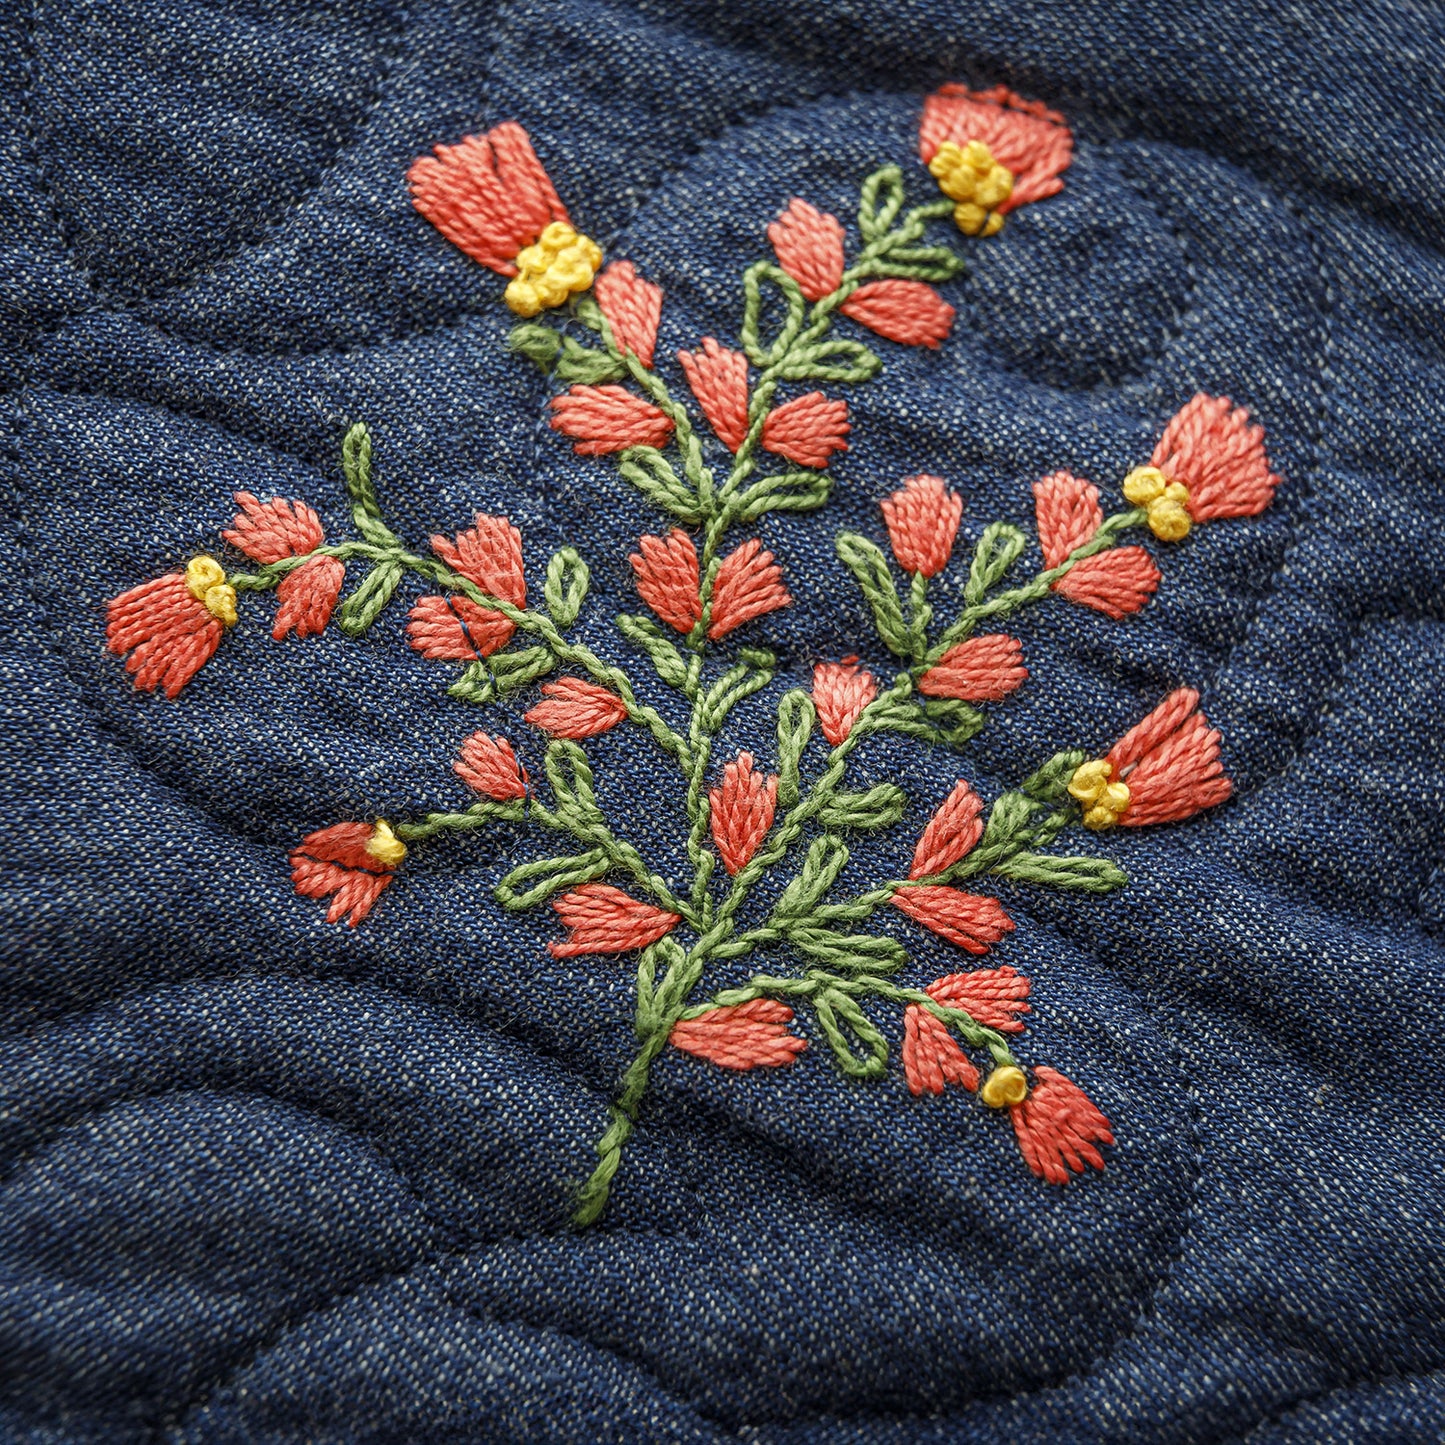 PREORDER - Ingrid's Wildflowers - An Heirloom Embroidery Kit by Missouri Star Alternative View #21